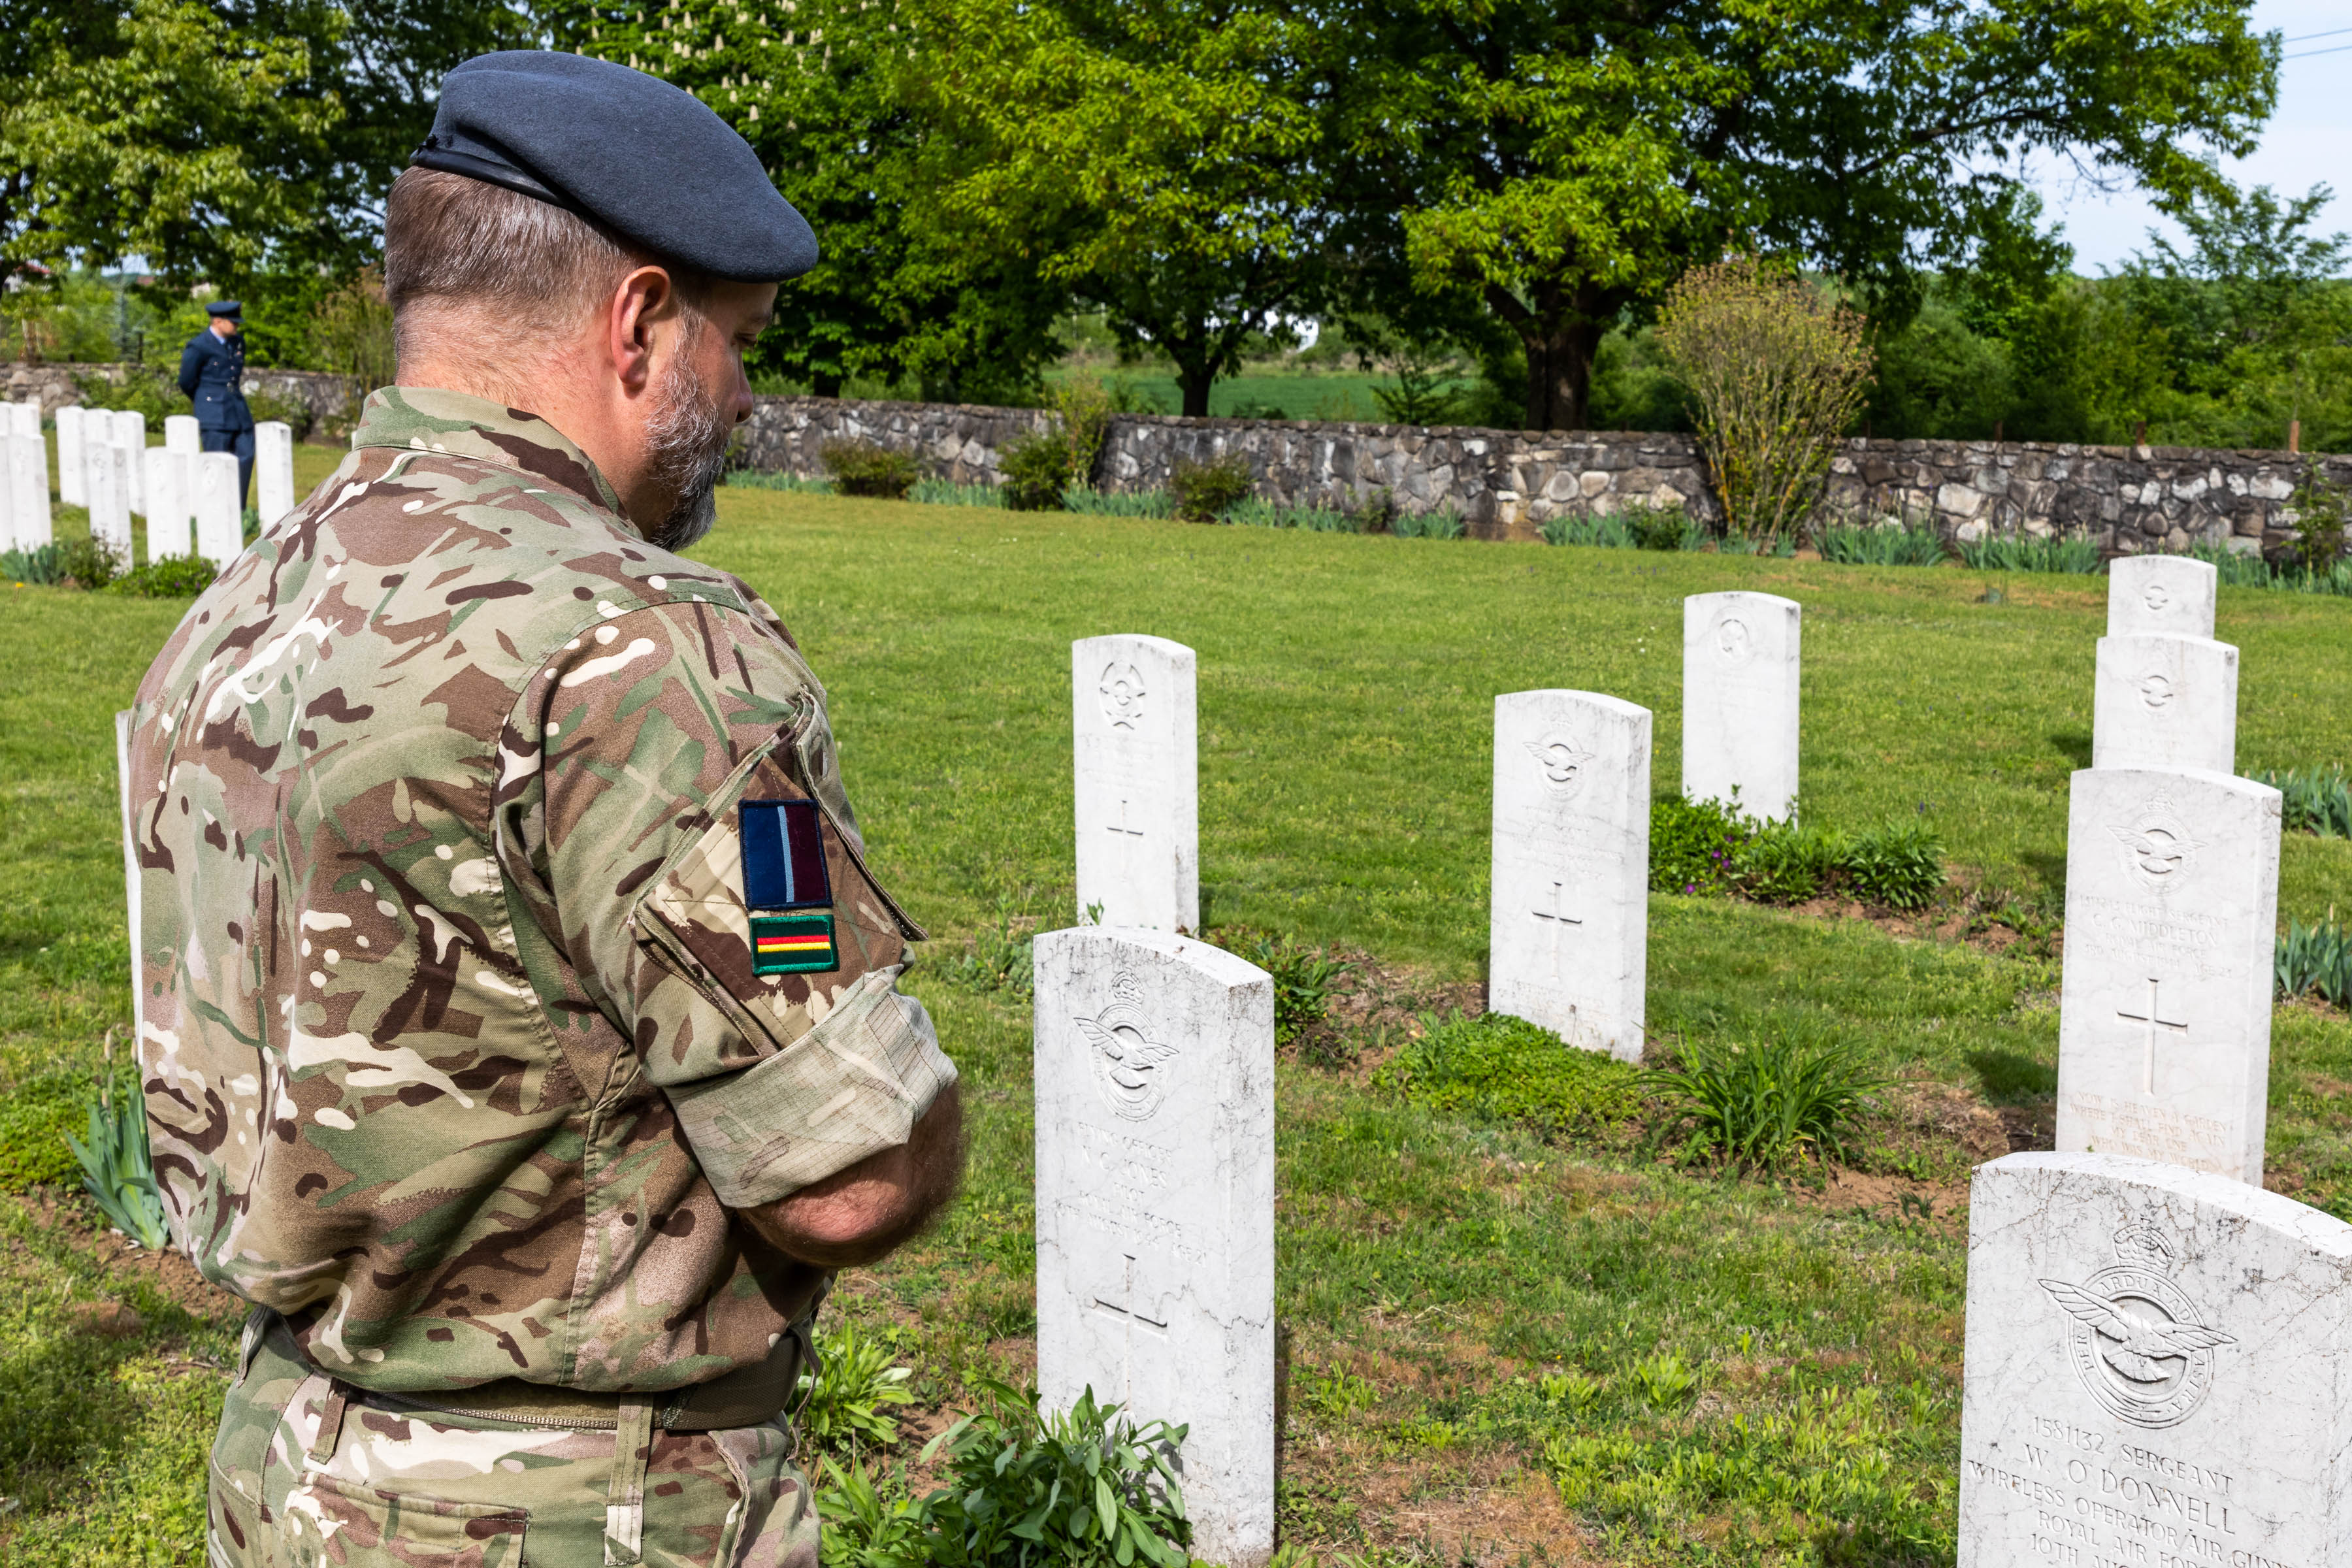 Personnel looks towards cemetery headstones.